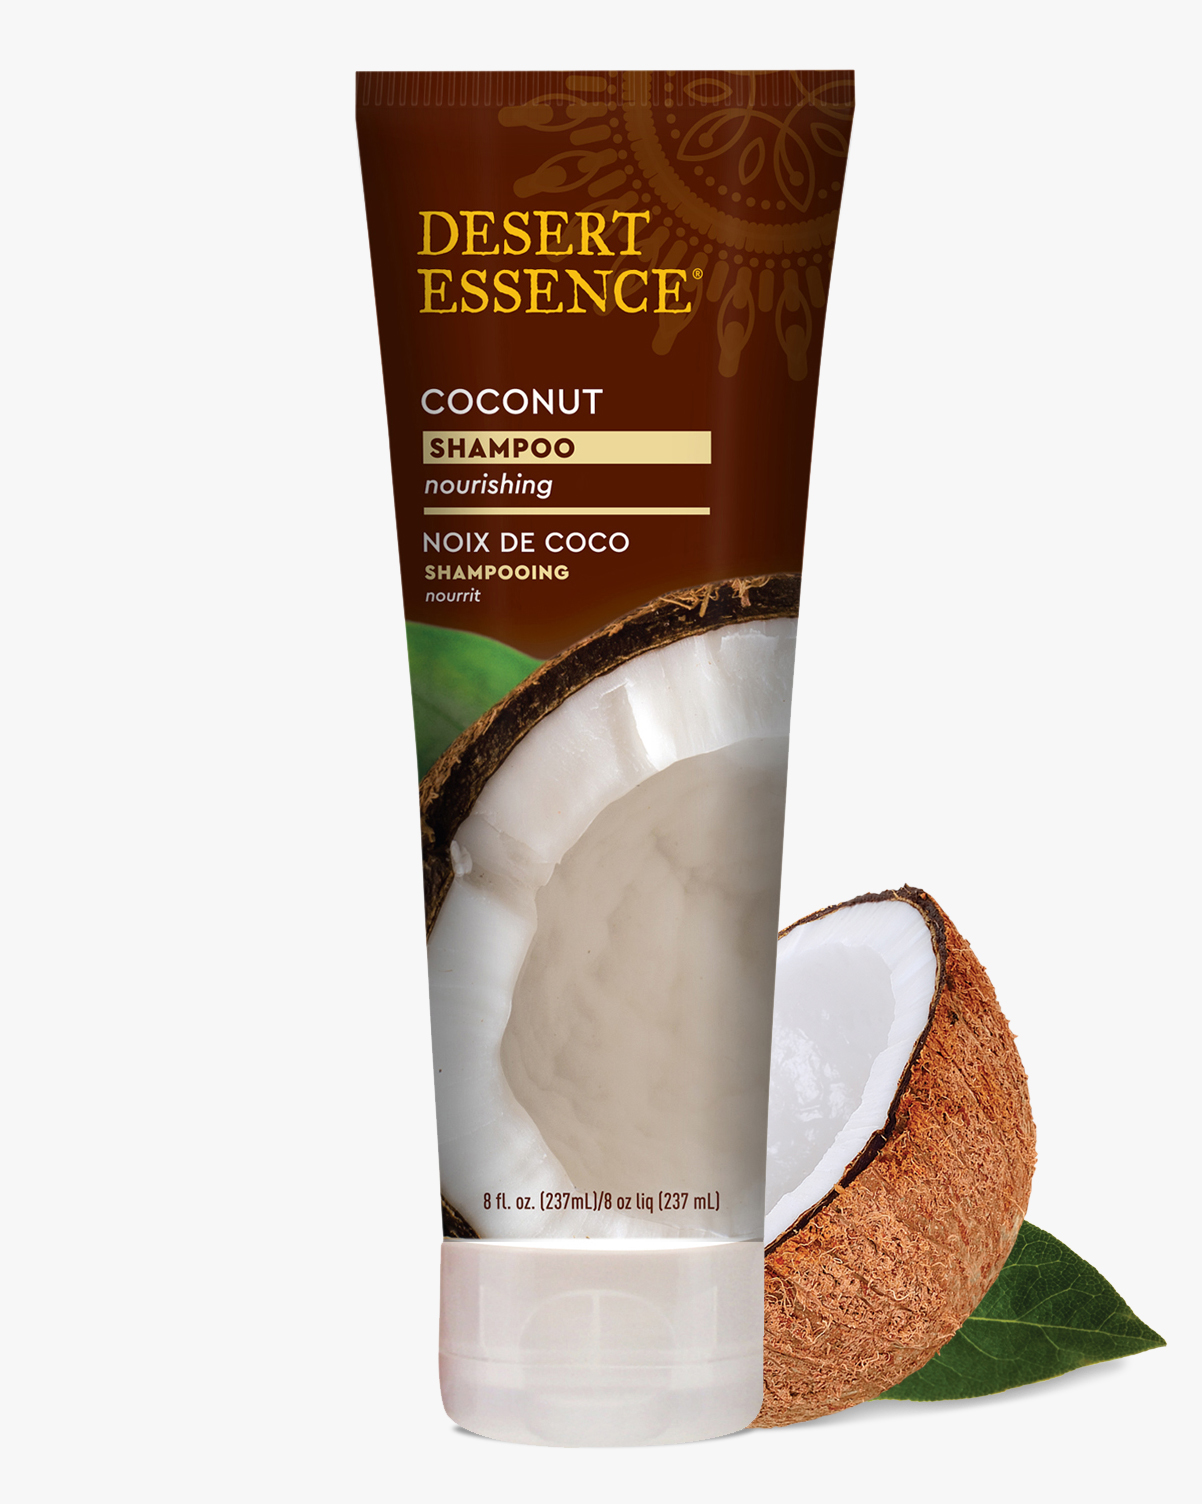 Splendor Medicin Konvention Coconut Shampoo for Dry Hair | Desert Essence